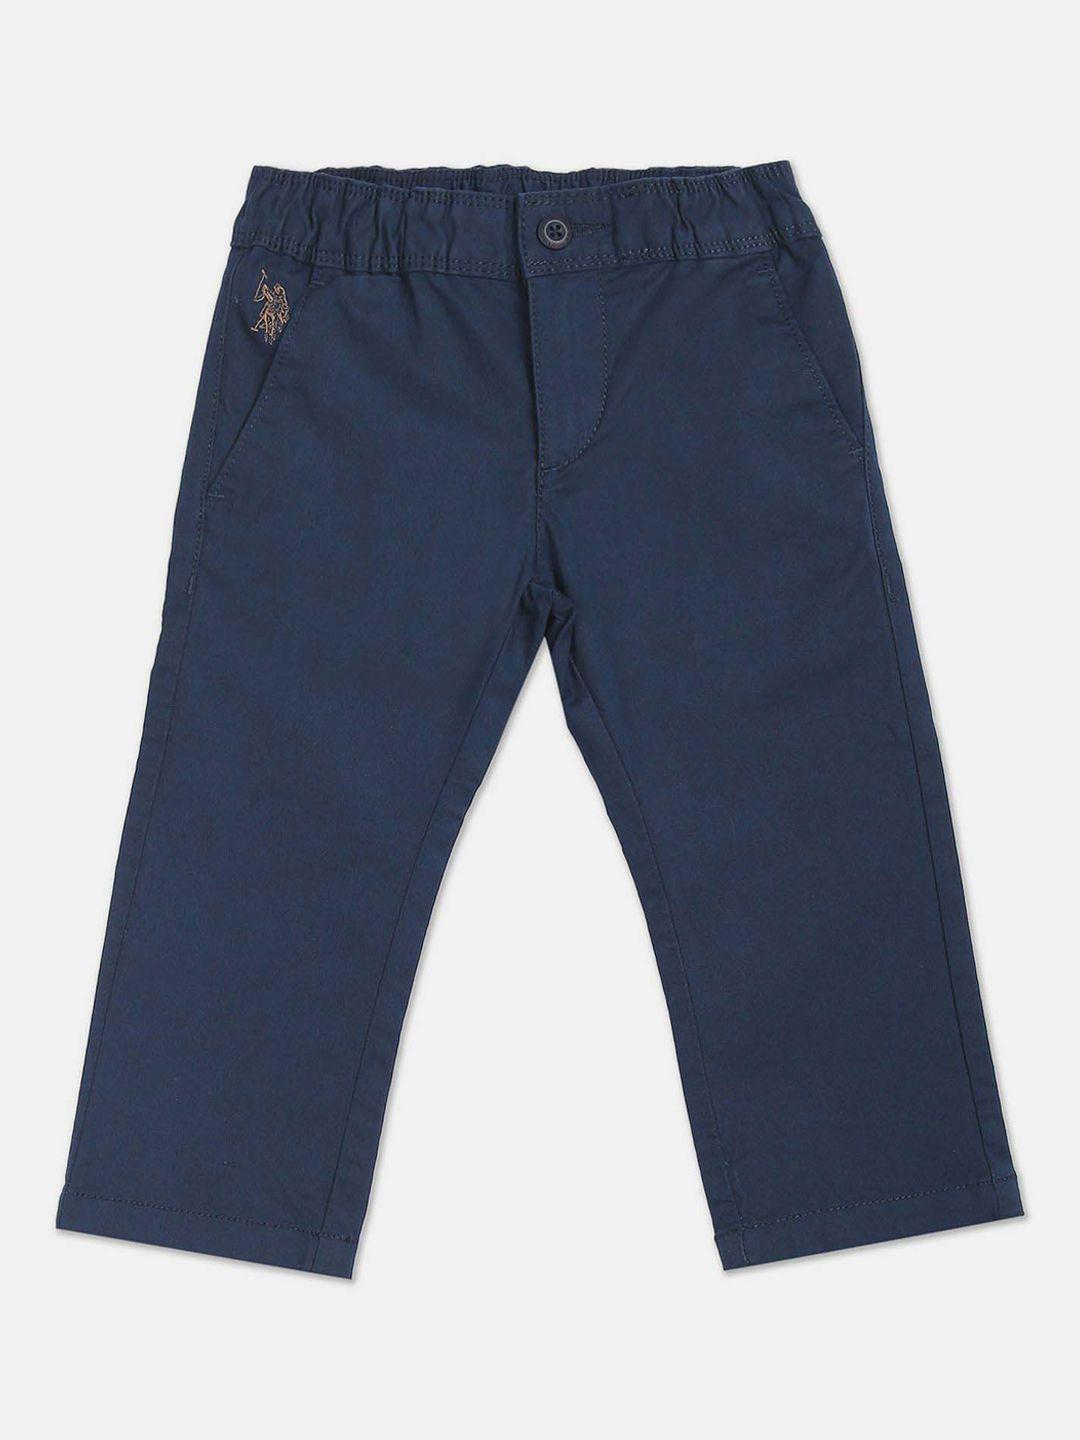 u.s. polo assn. kids boys regular fit mid-rise trousers